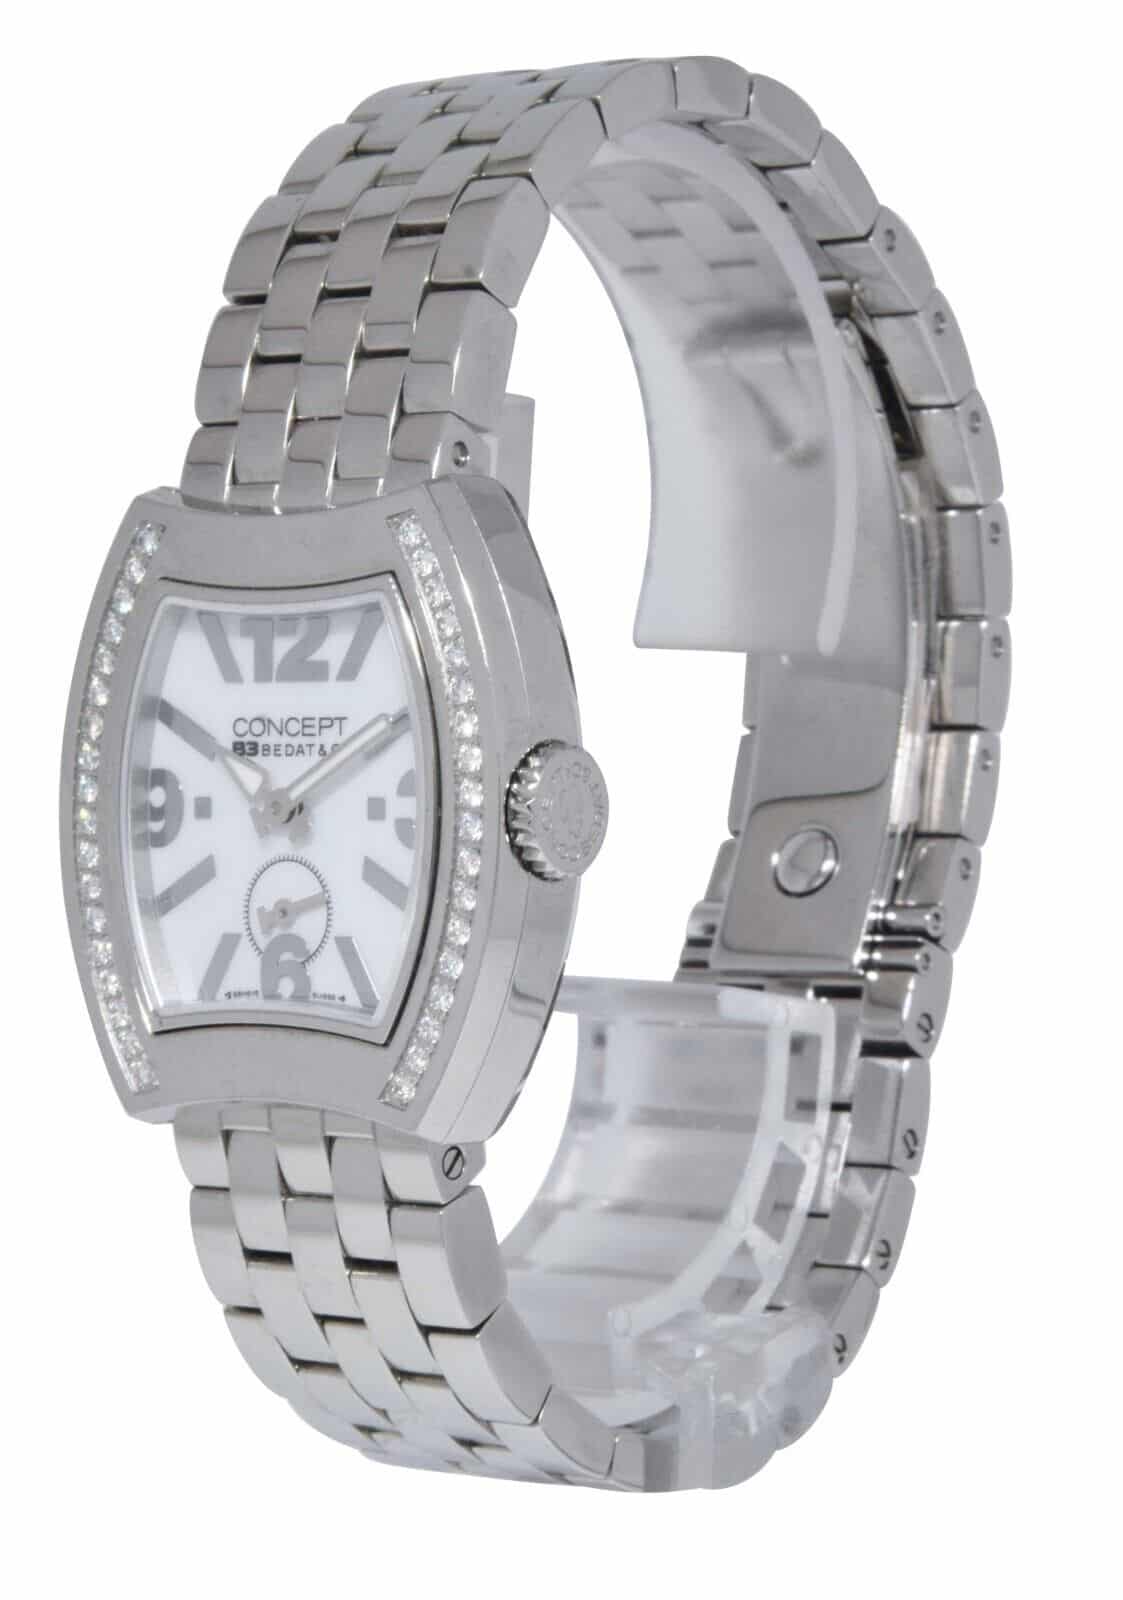 NOS Bedat & Co. Concept B3 Steel & Diamond White Ladies Quartz Watch B/P CB03